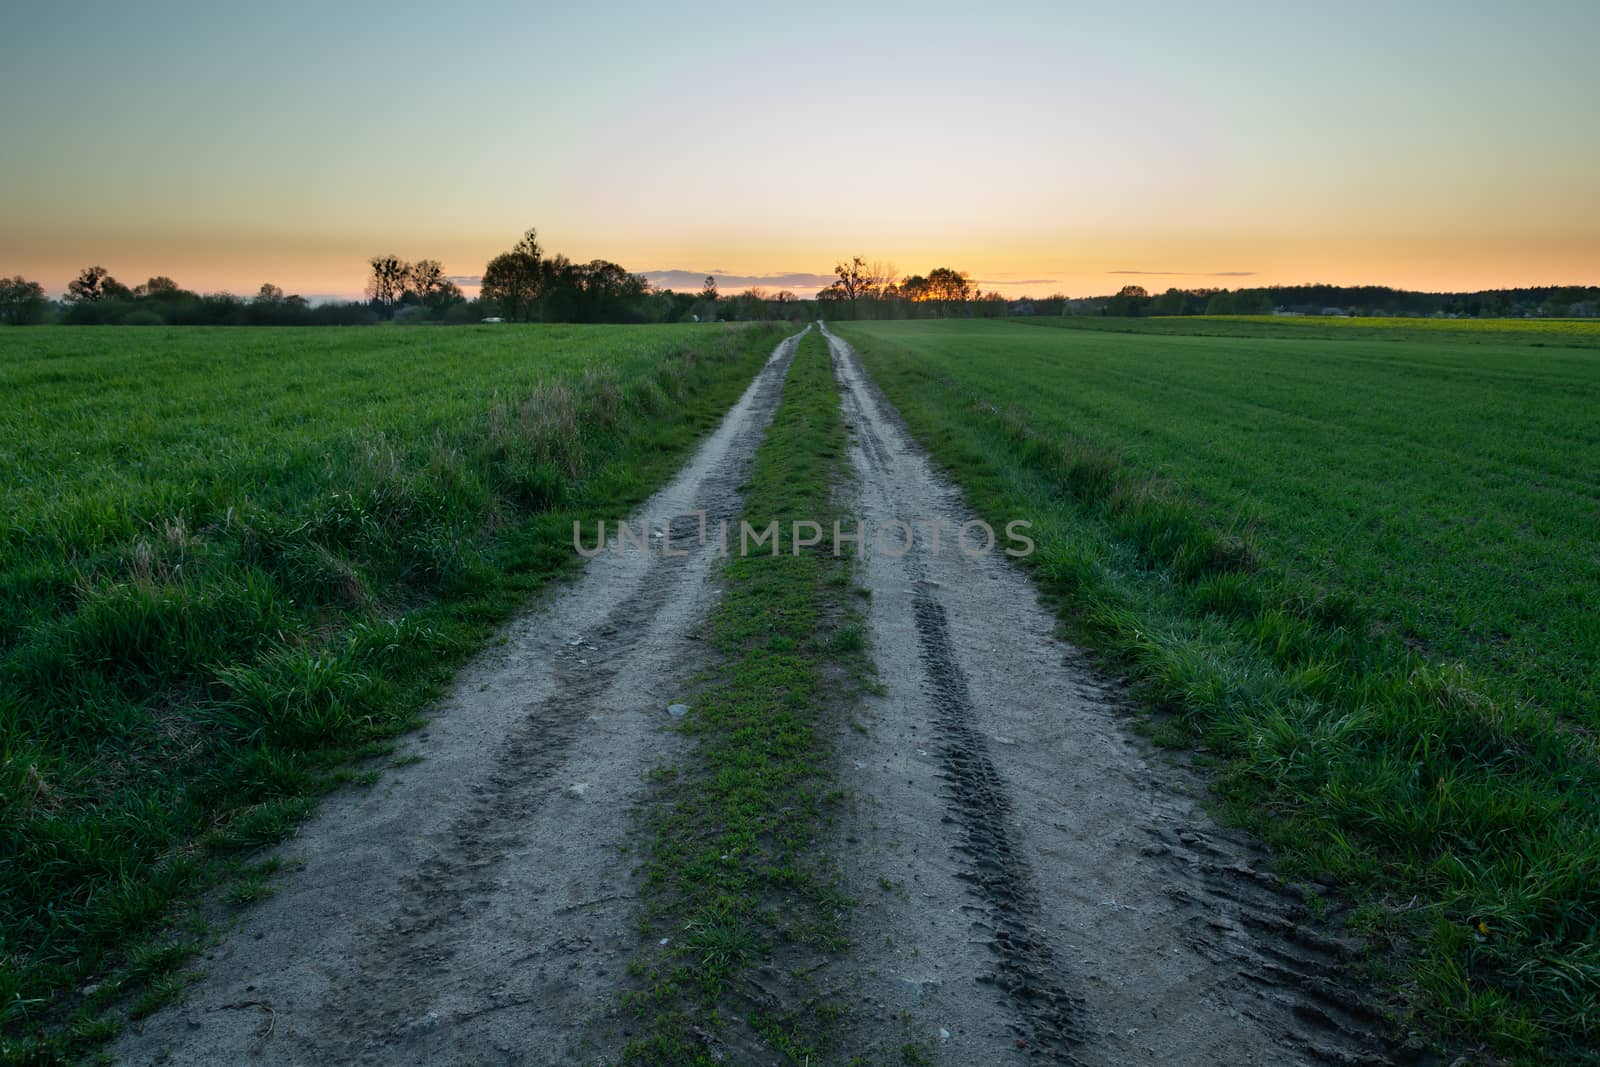 Dirt road through green fields, view after sunset by darekb22